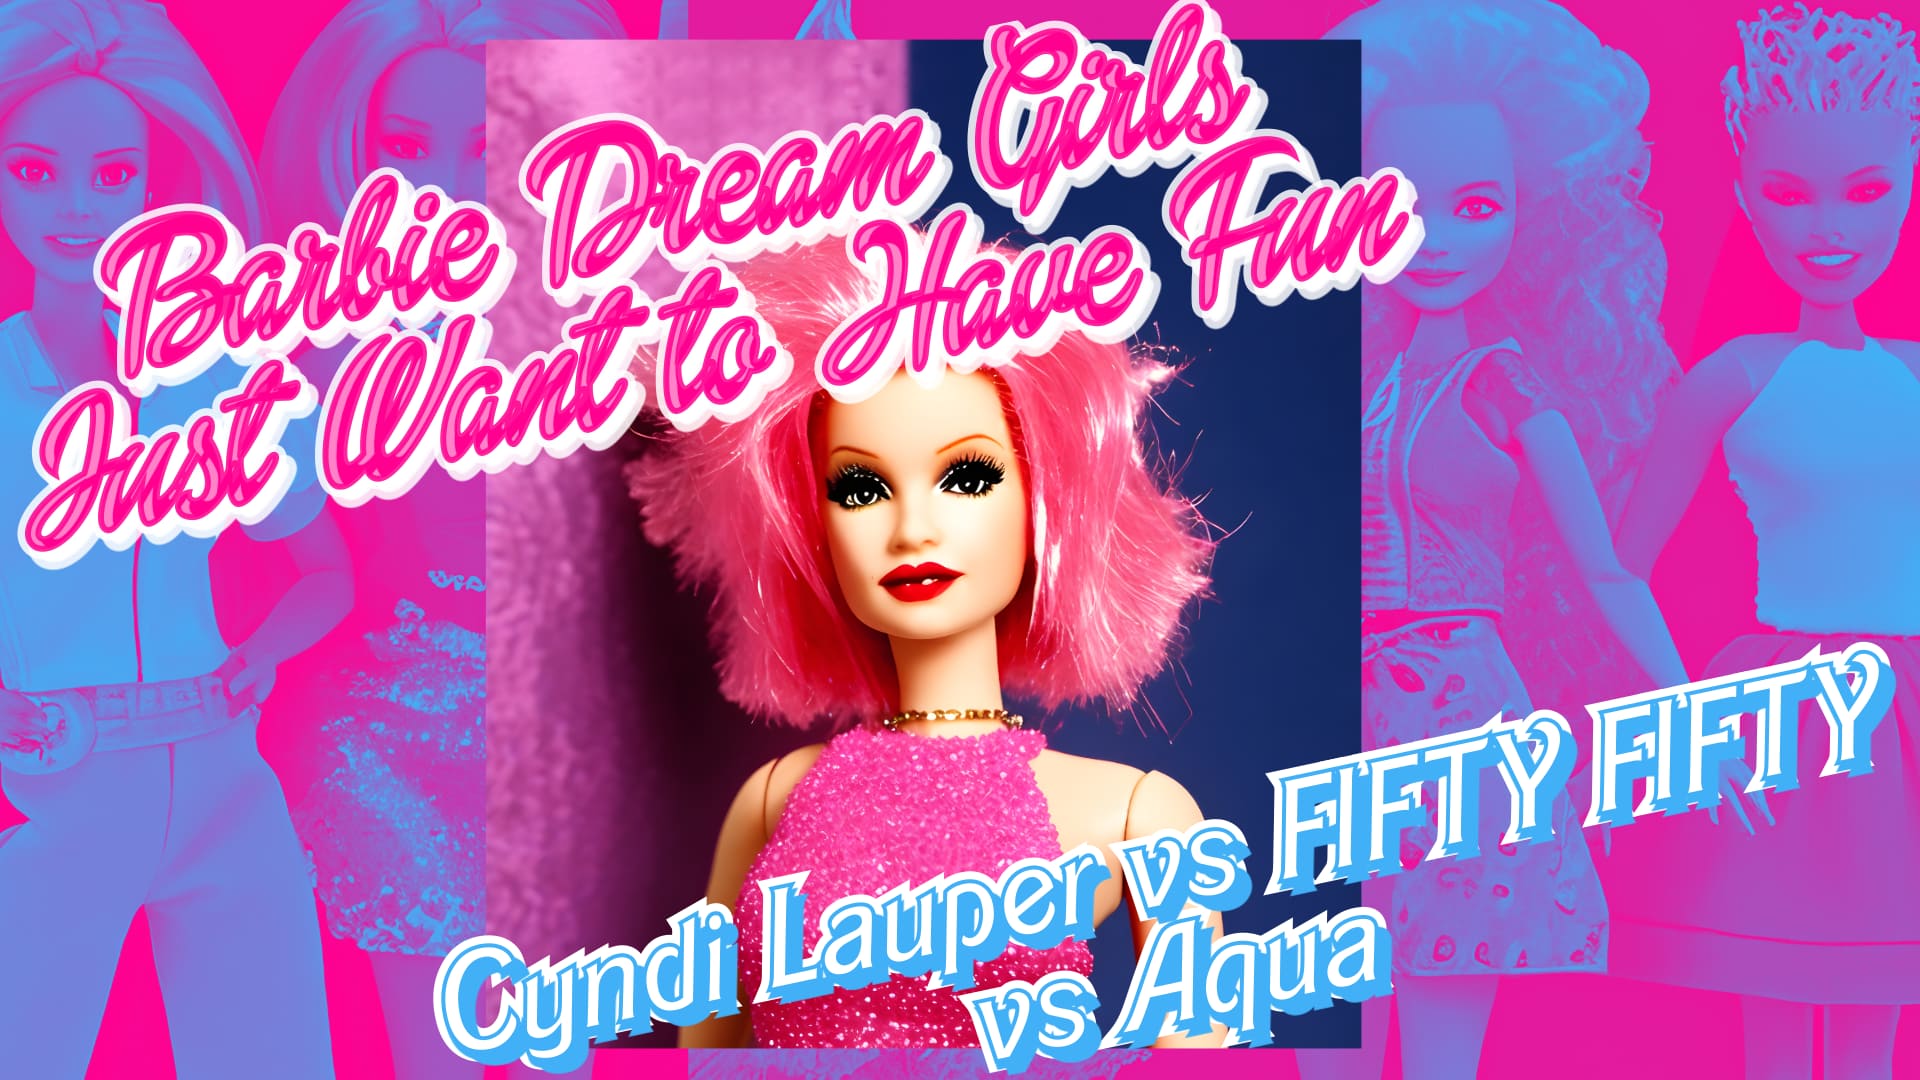 Instamatic - Barbie Dream Girls Just Wanna Have Fun (Cyndi Lauper vs FIFTY FIFTY vs Aqua) mashup cover